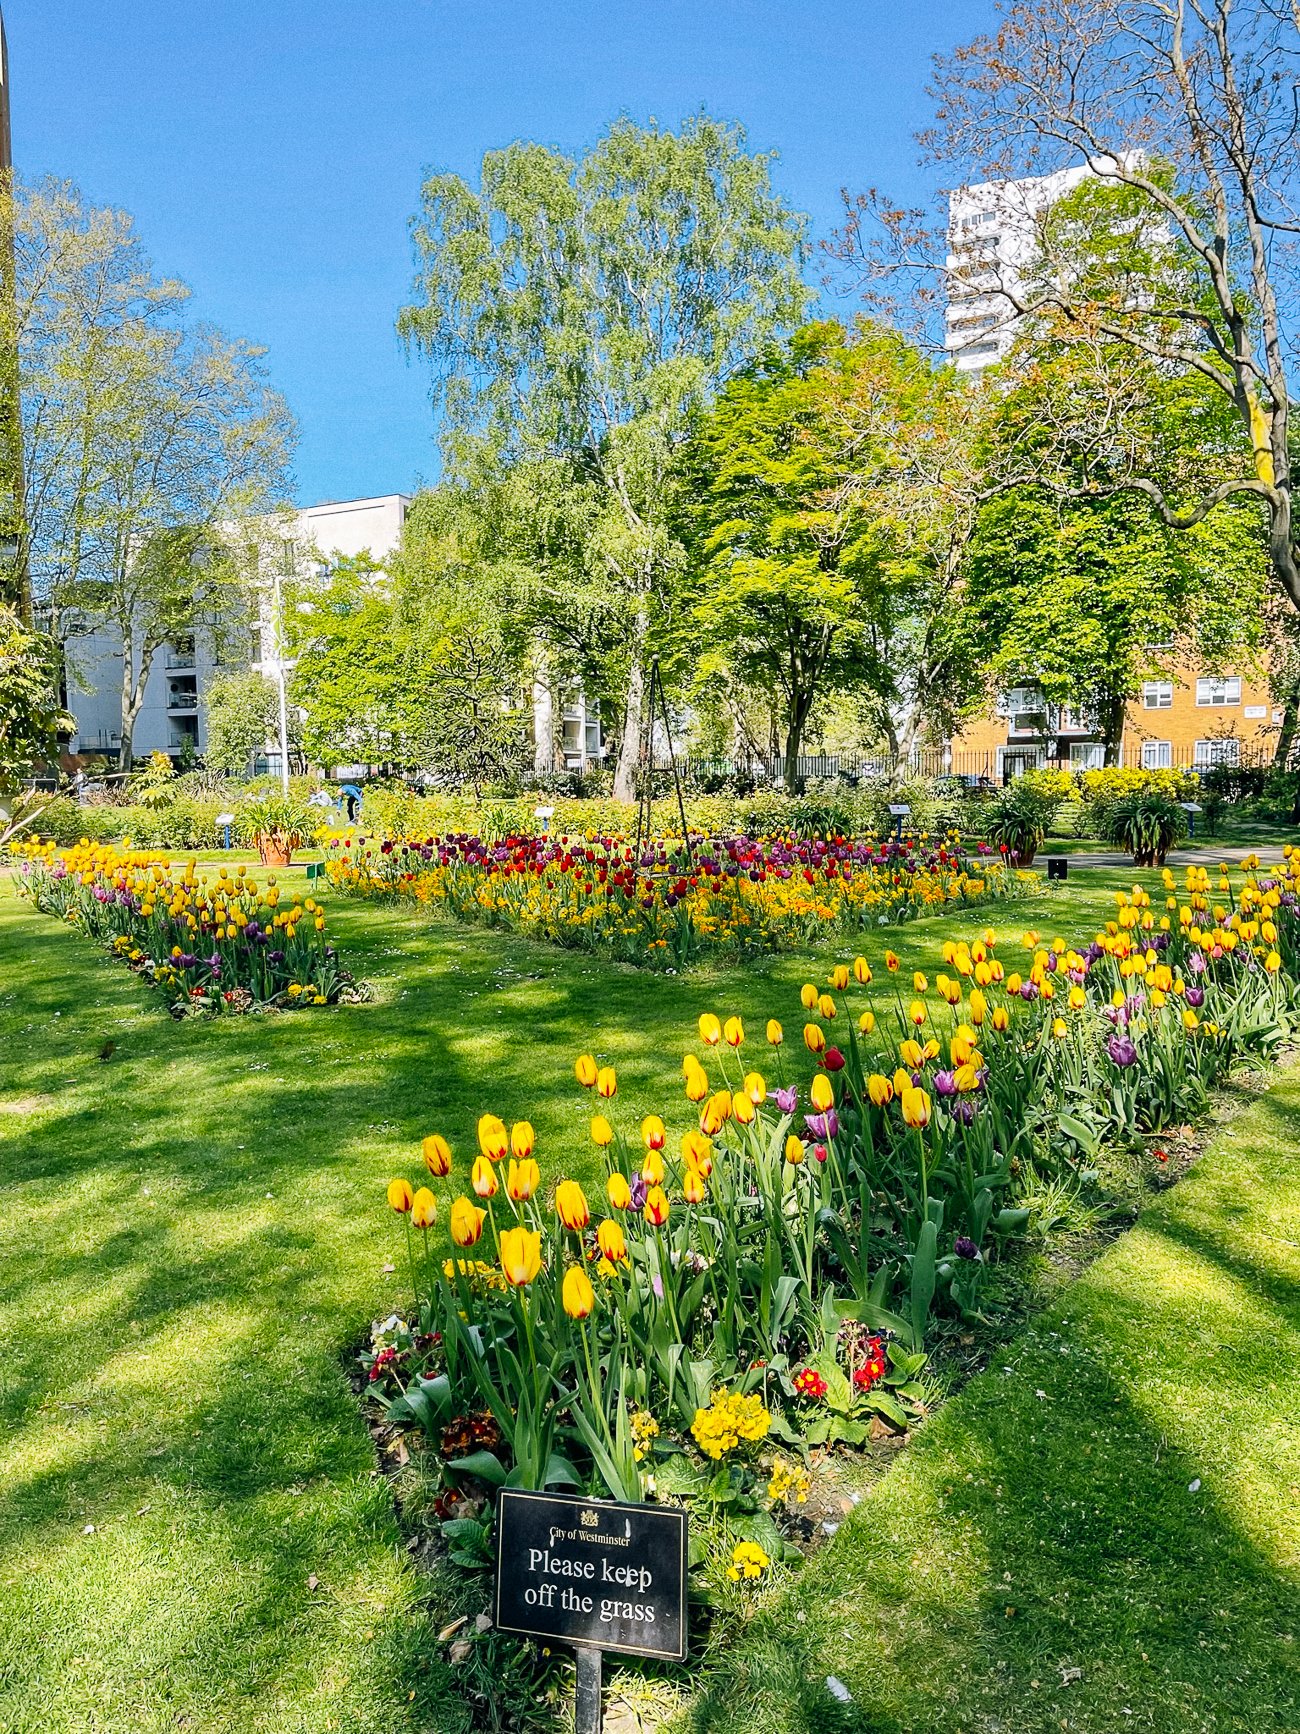 Marylebone park with tulips